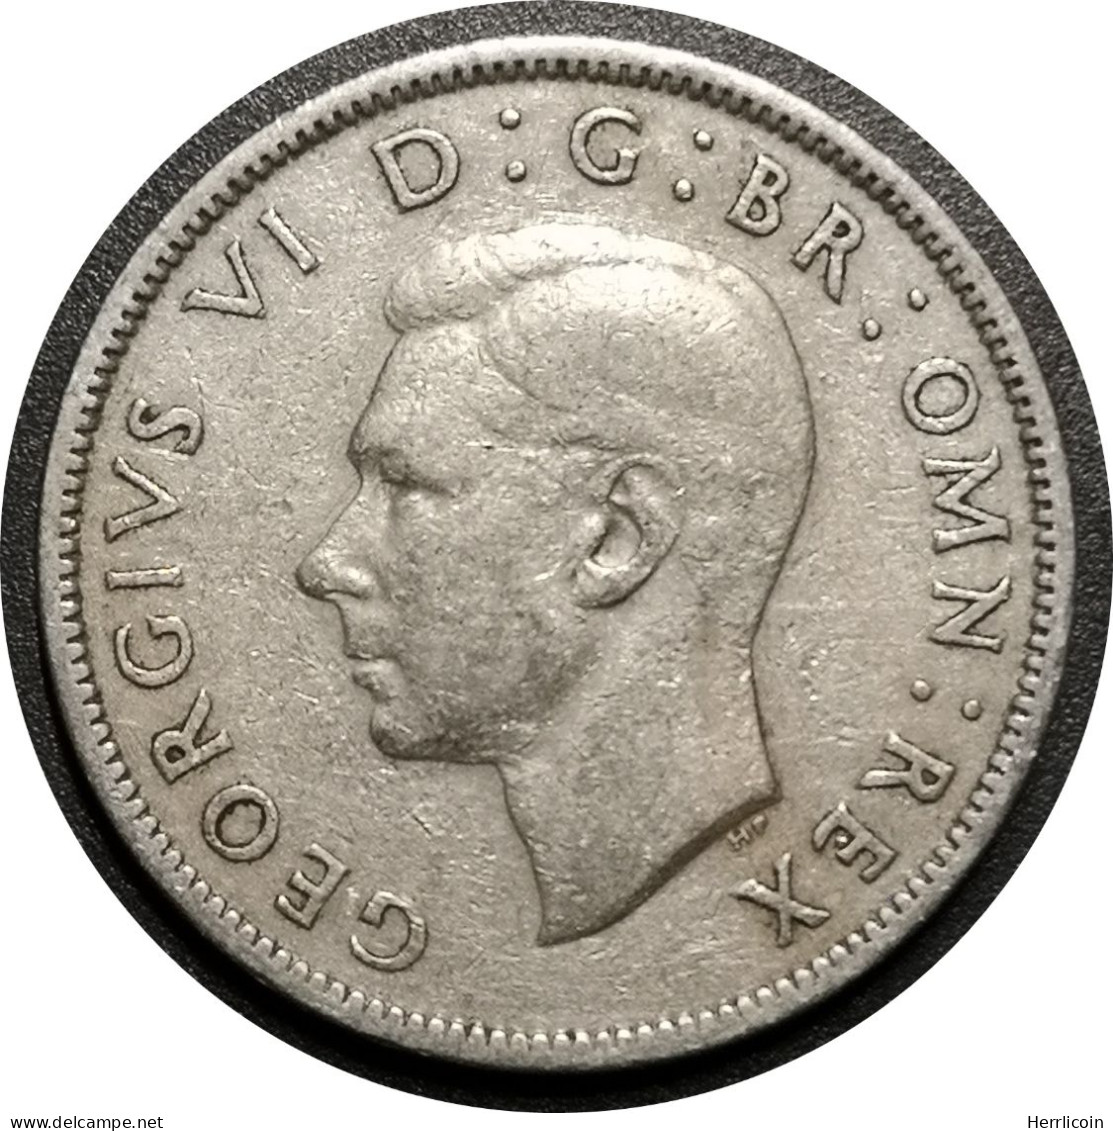 Monnaie Royaume-Uni - 1951 - 2 Shillings George VI Cupronickel - J. 1 Florin / 2 Shillings